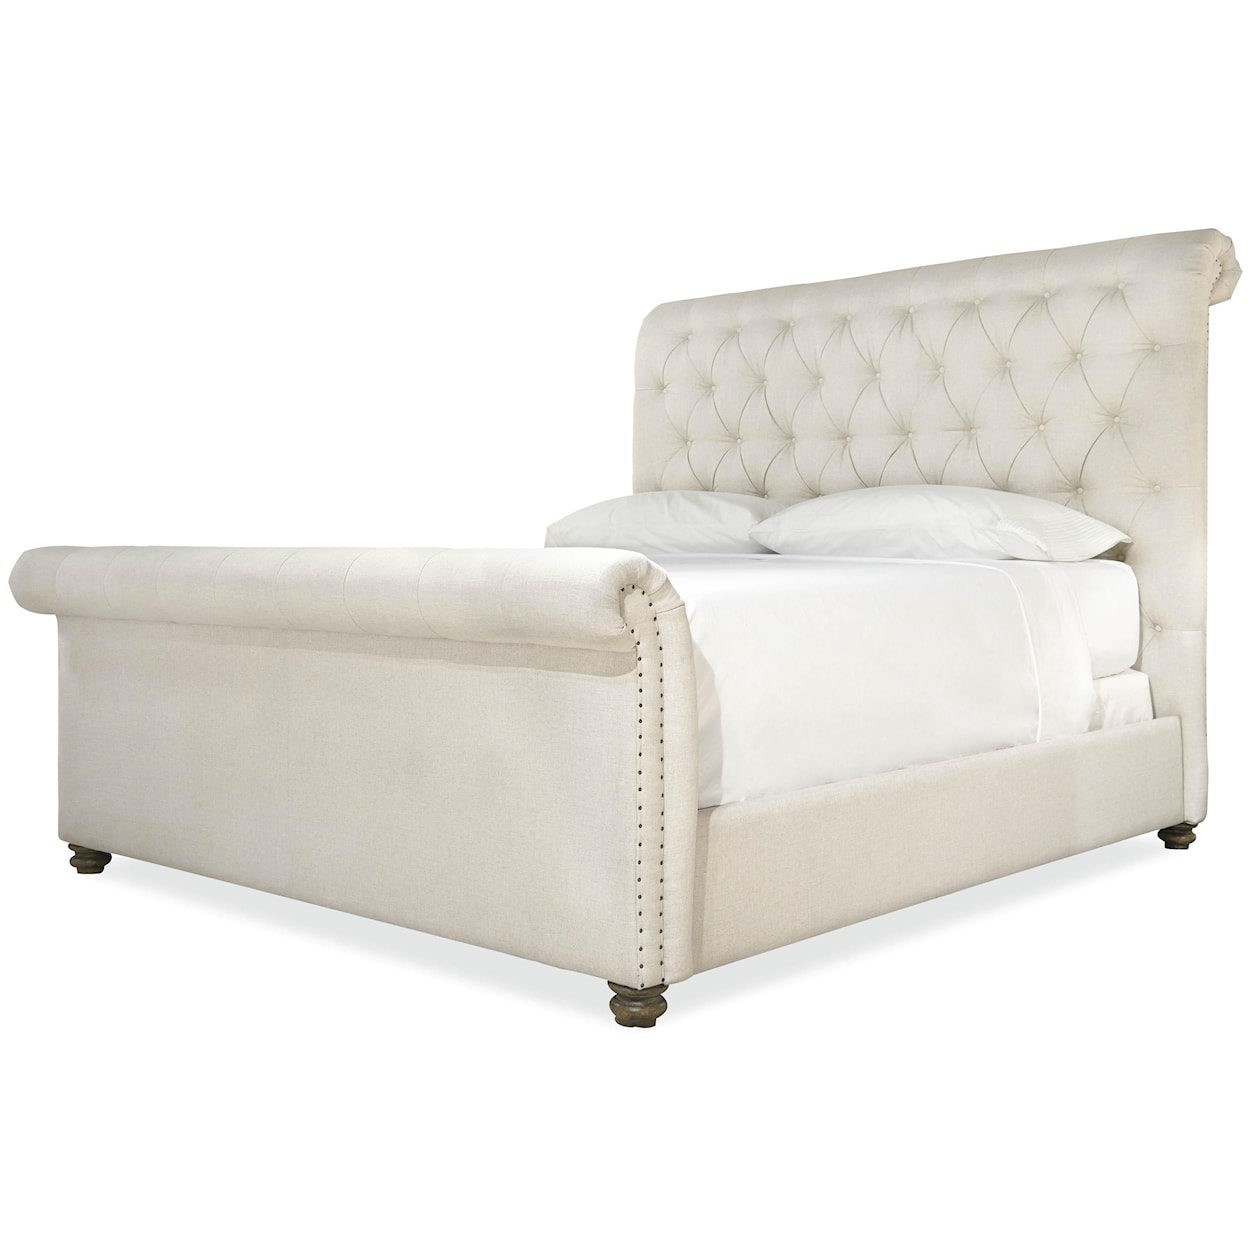 Universal California - Malibu Upholstered King Bed